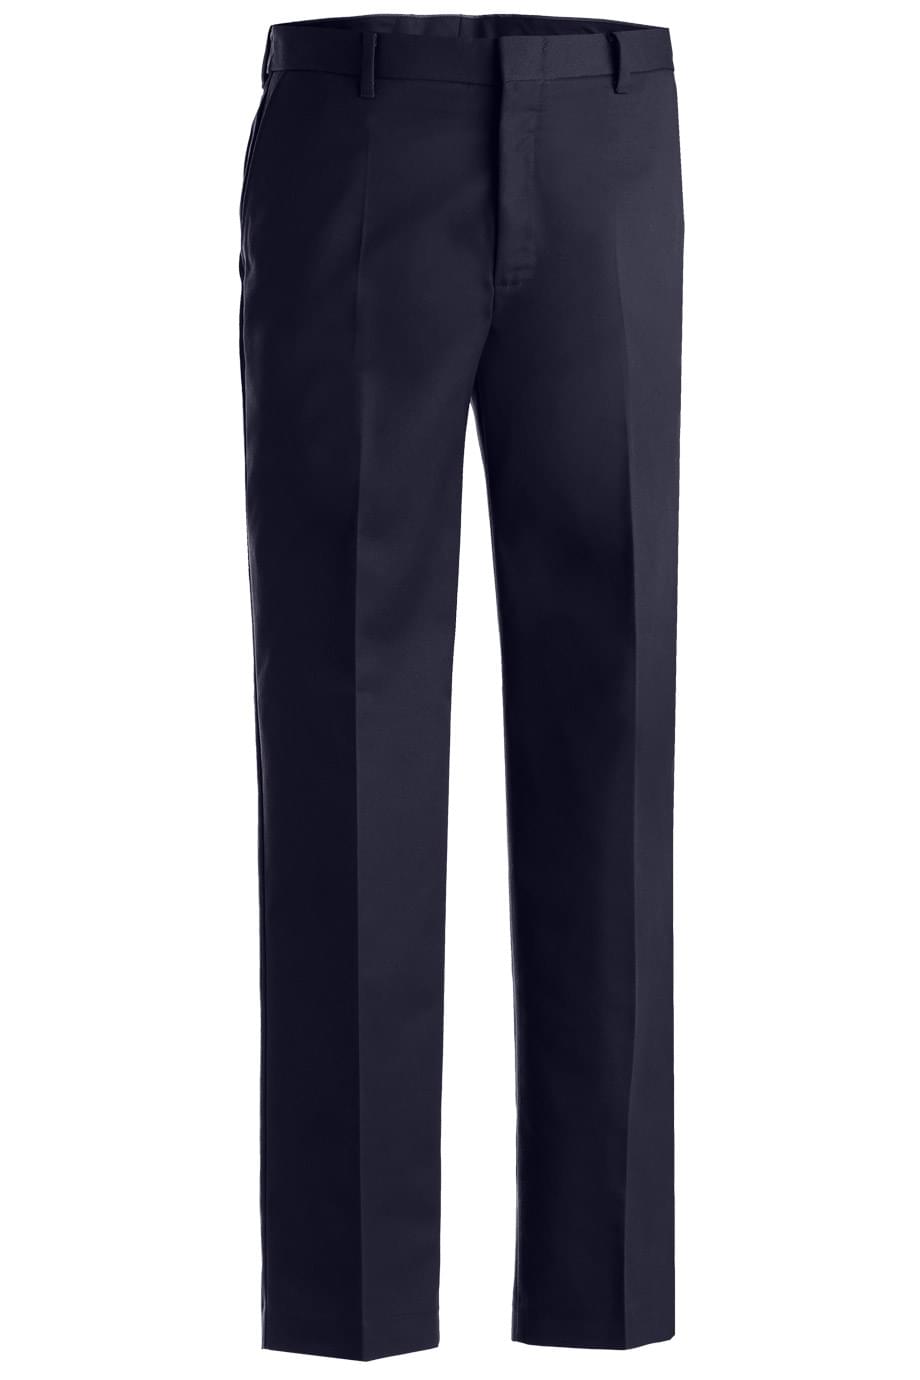 Edwards Garment 2510 - Men's Business Casual Flat Front Pant